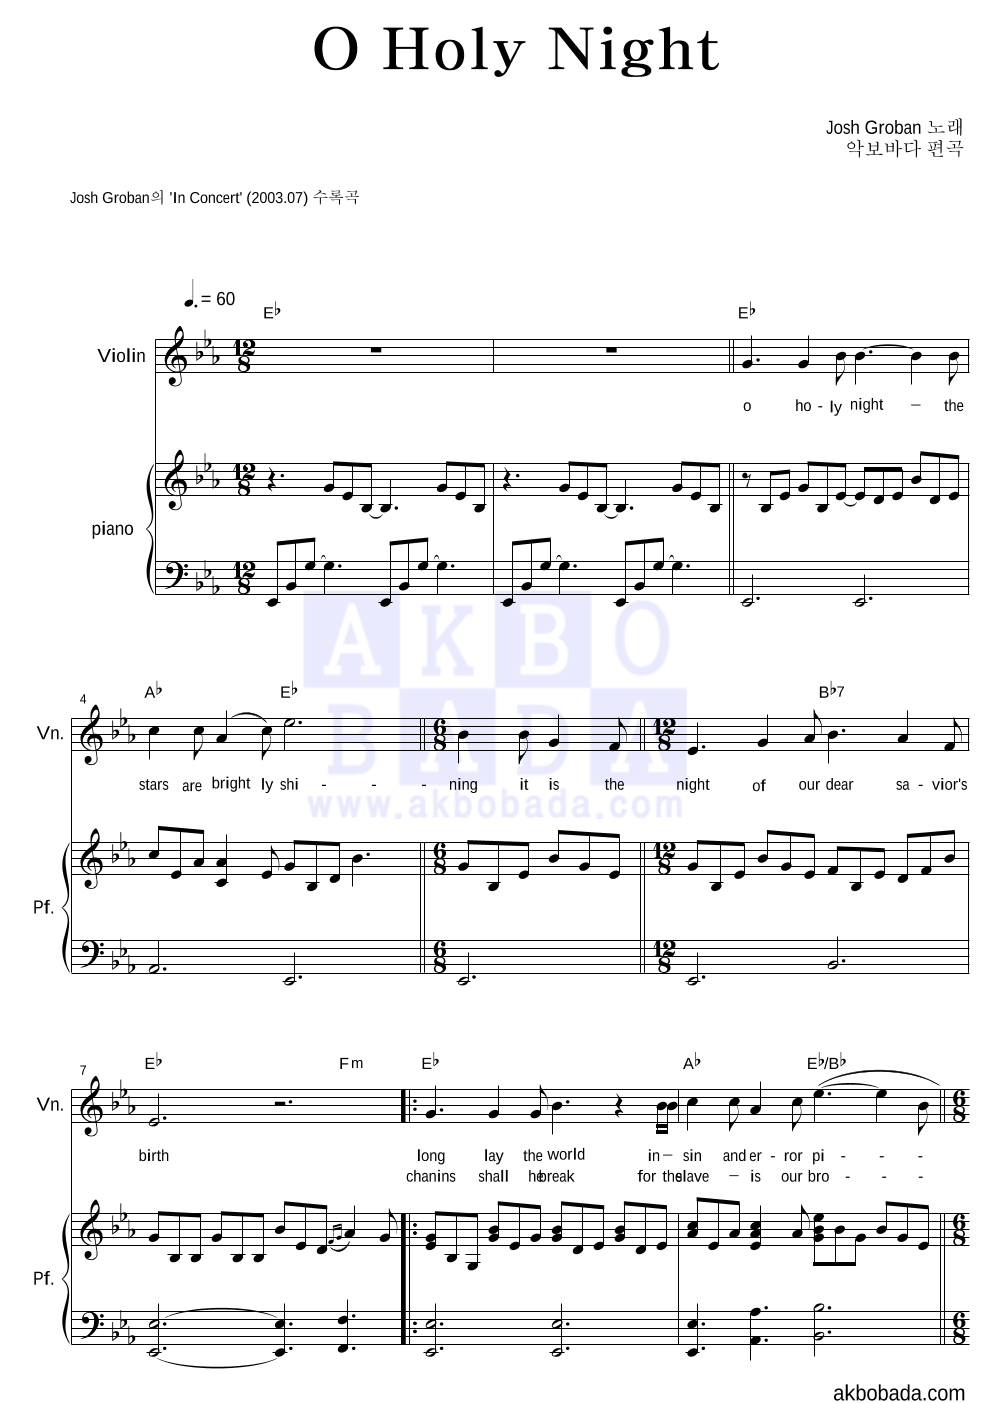 Josh Groban - O Holy Night 바이올린&피아노 악보 